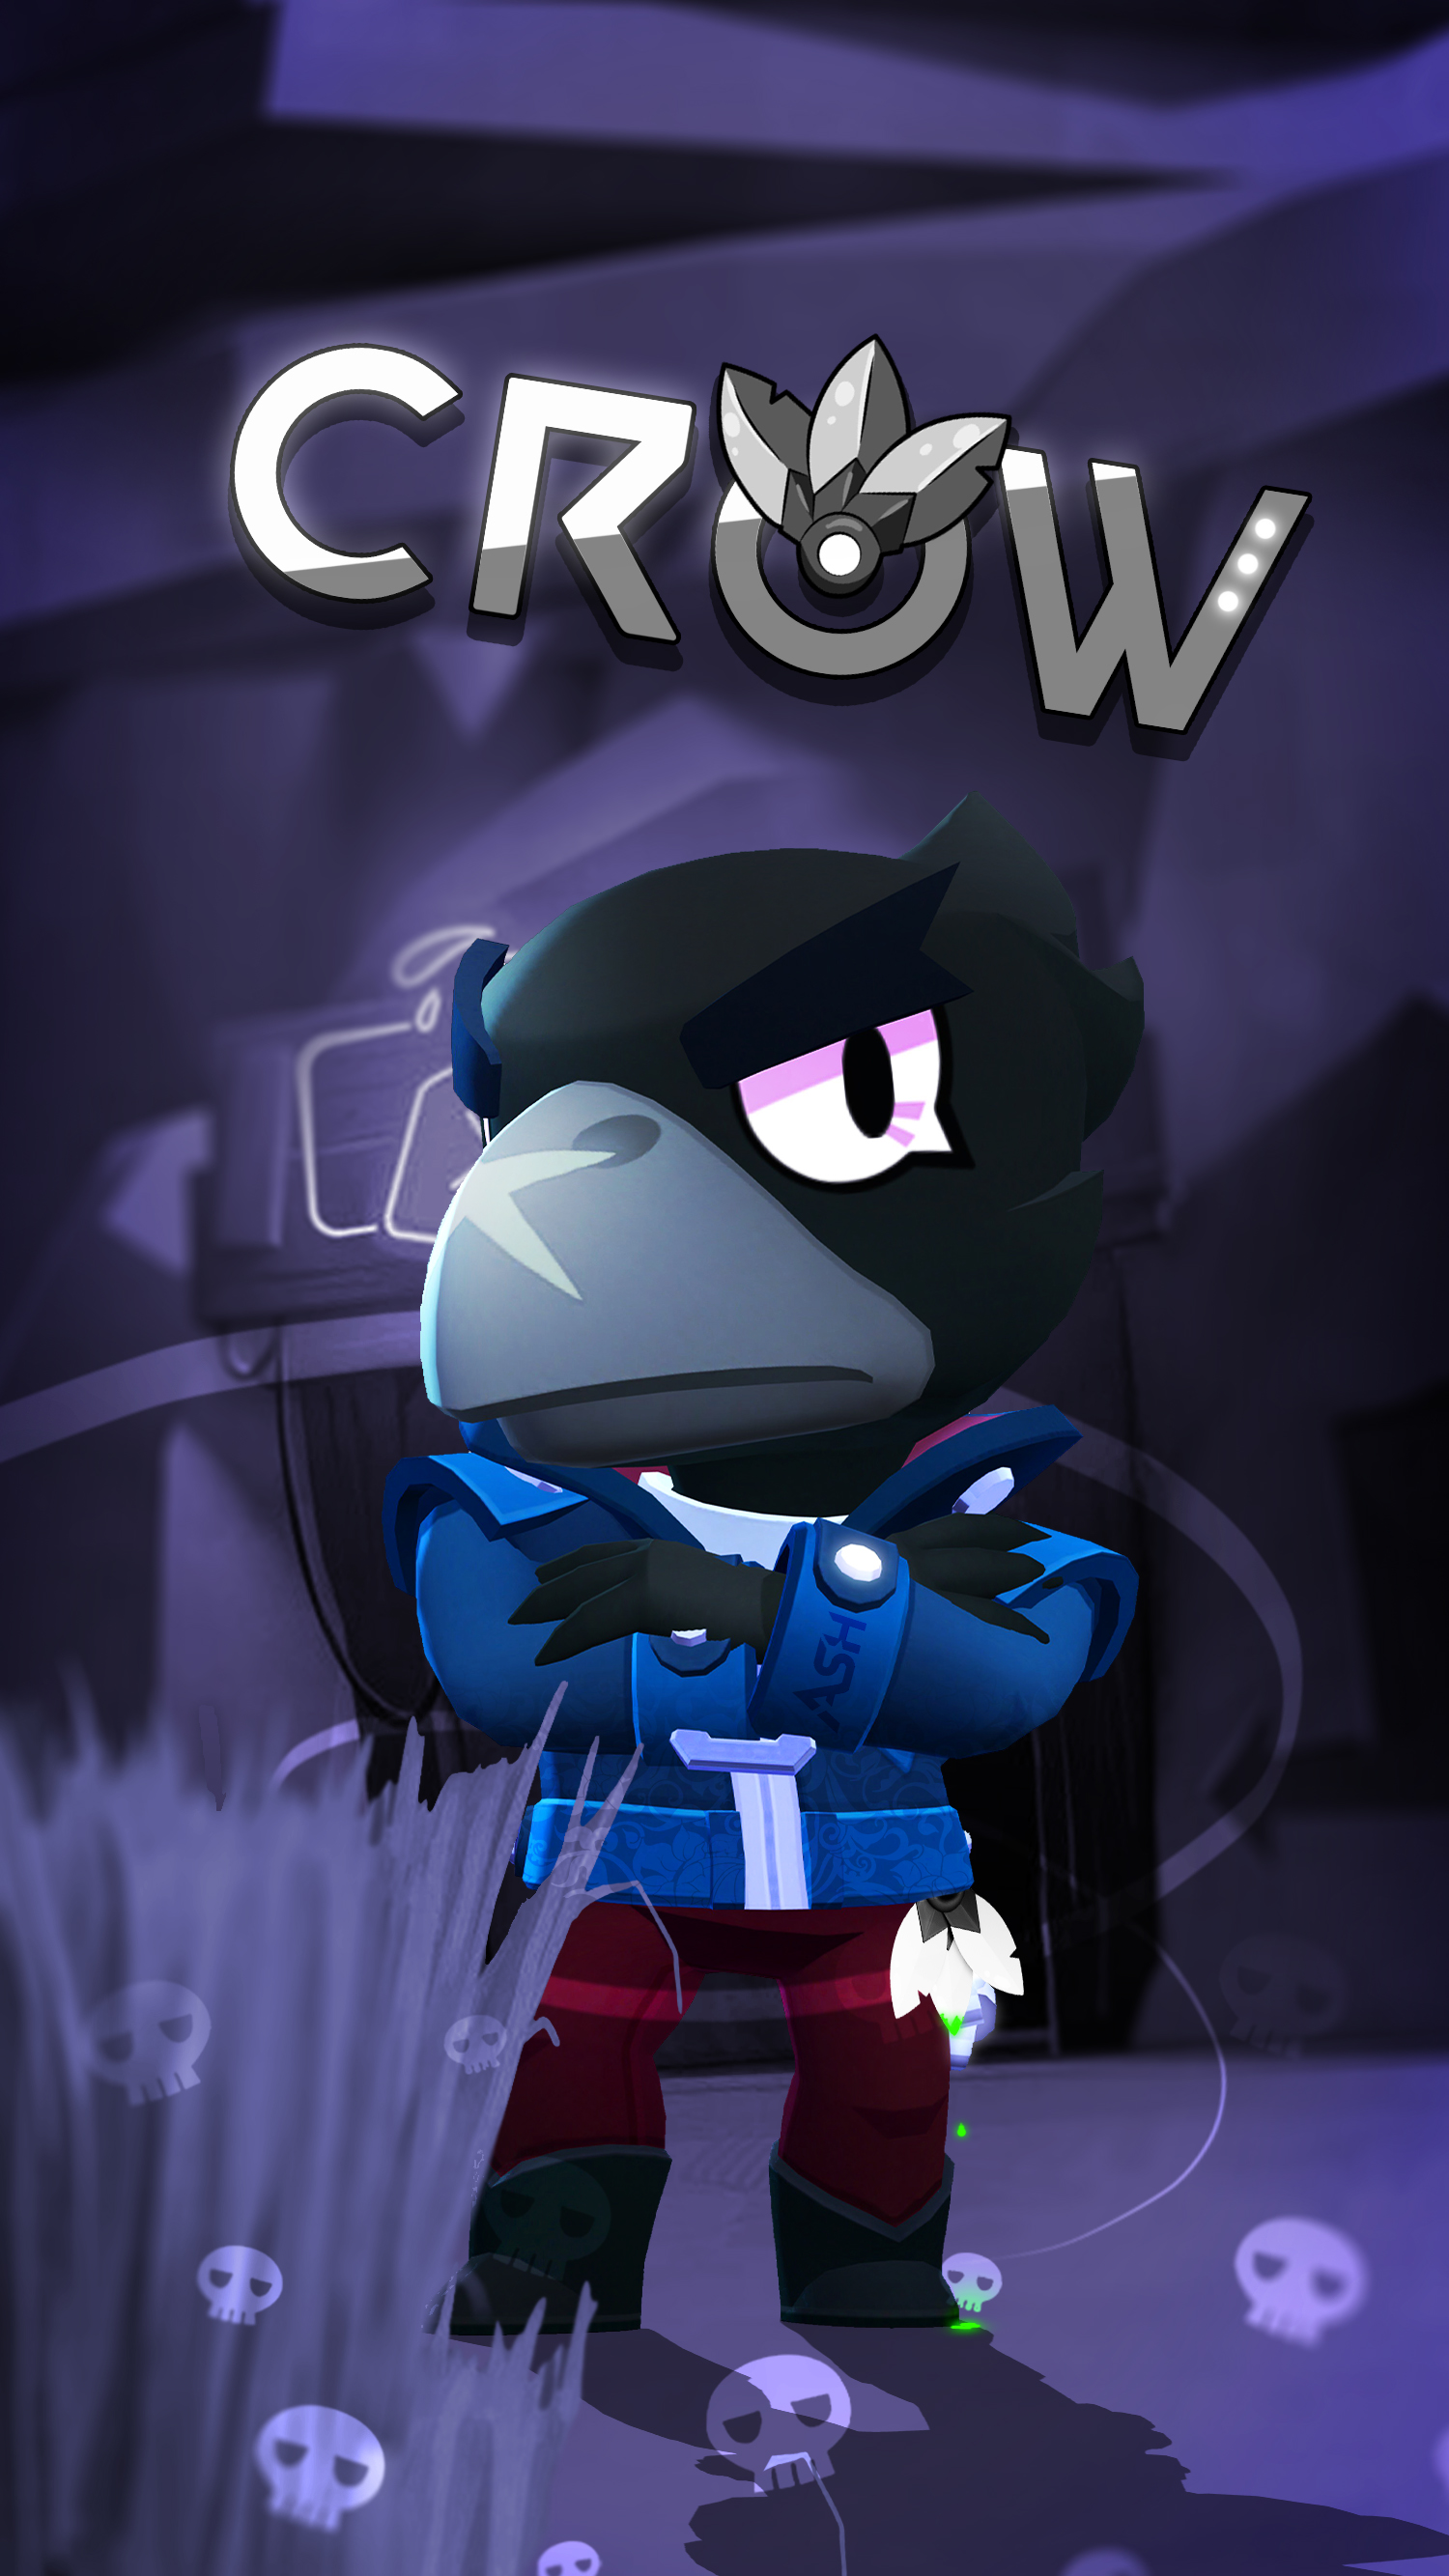 Crow From Brawl Stars By Wingdinggg On Deviantart - blue crow brawl stars